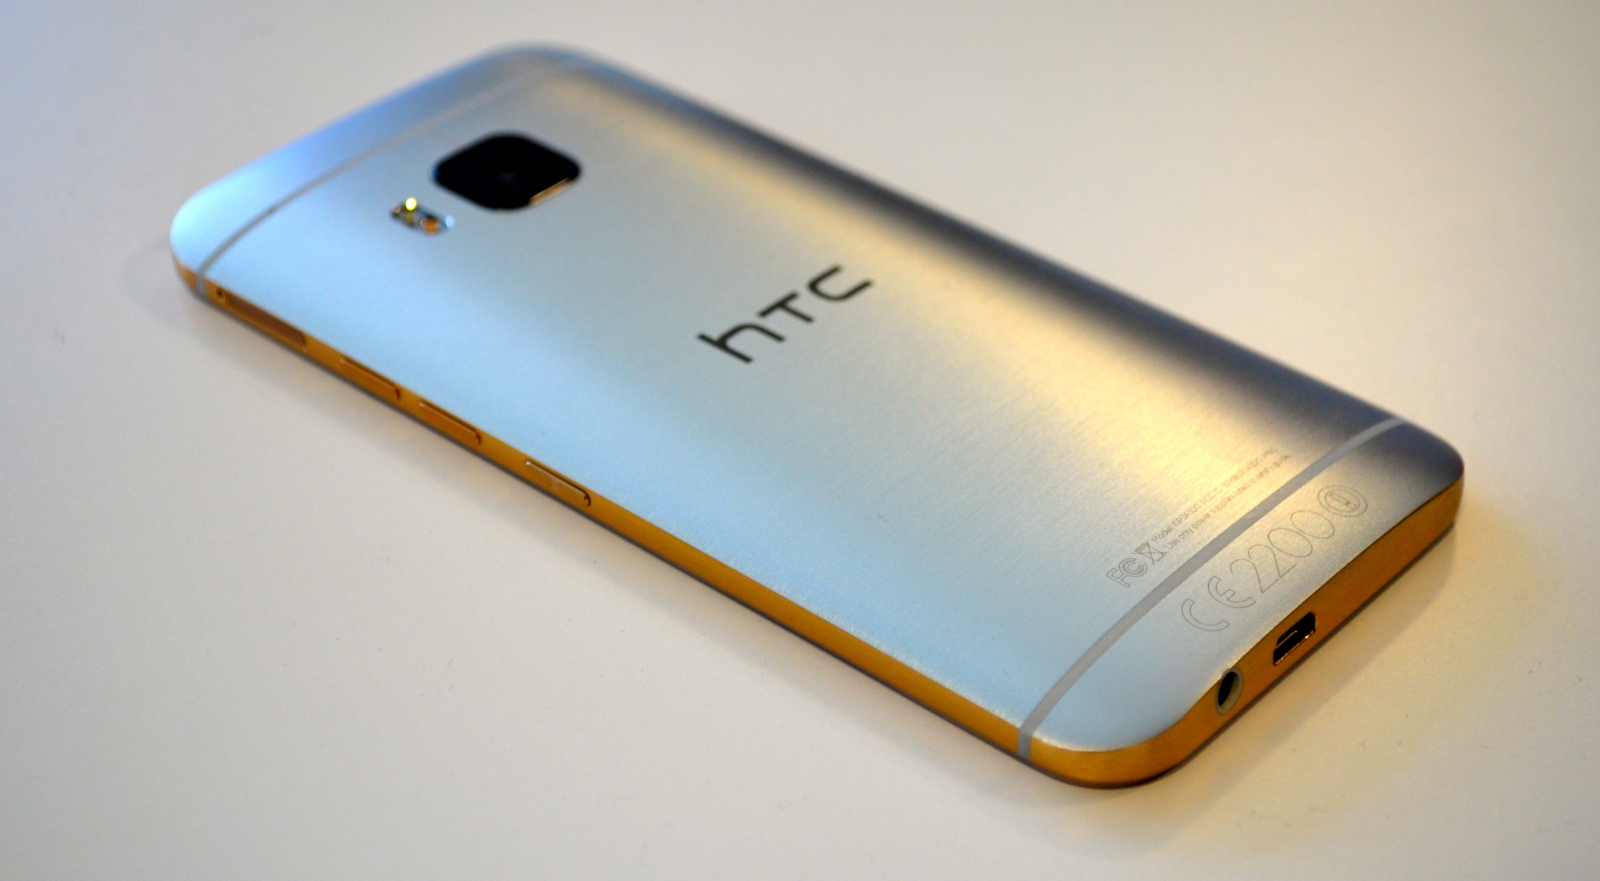 HTC One M9 desbloqueado recibe Android 6.0 Marshmallow